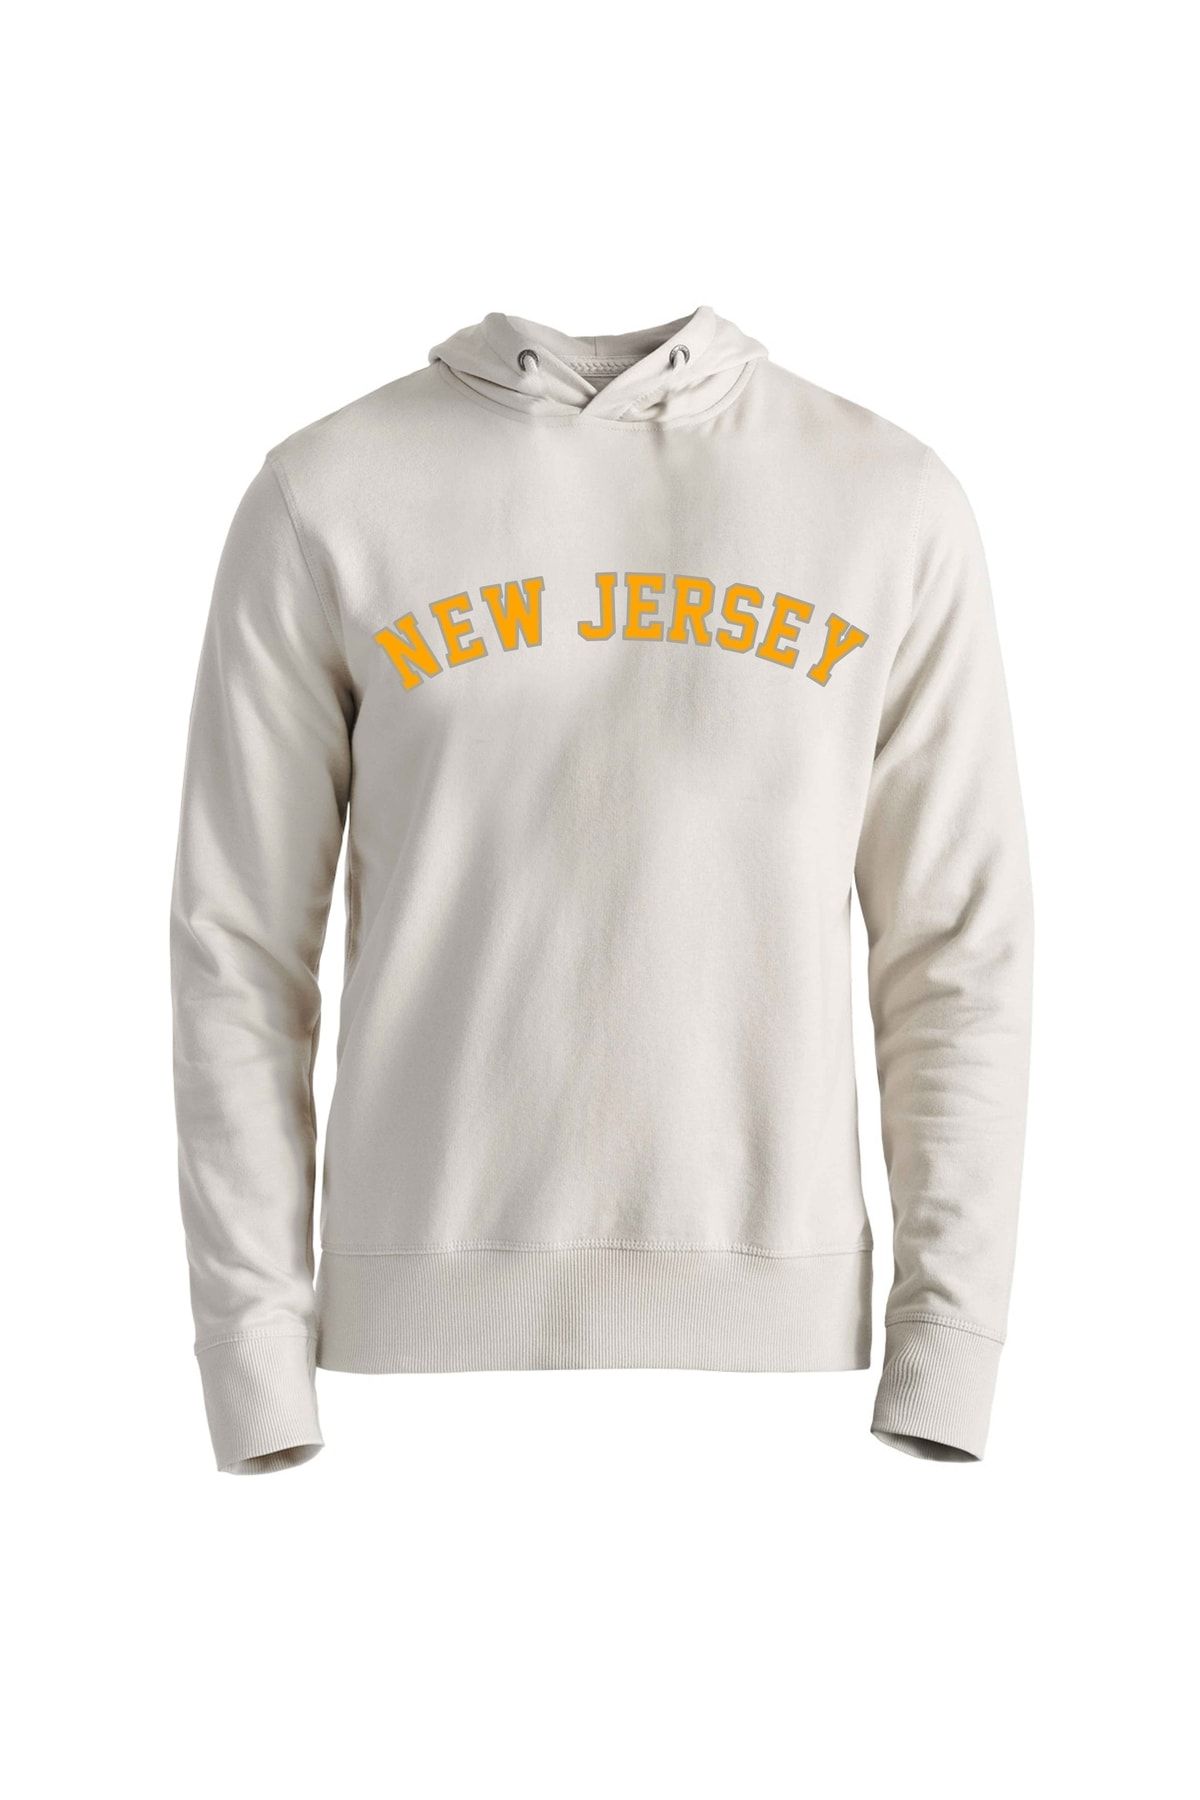 Alfa Tshirt New Jersey Gold Yazılı Ekru Sweatshirt